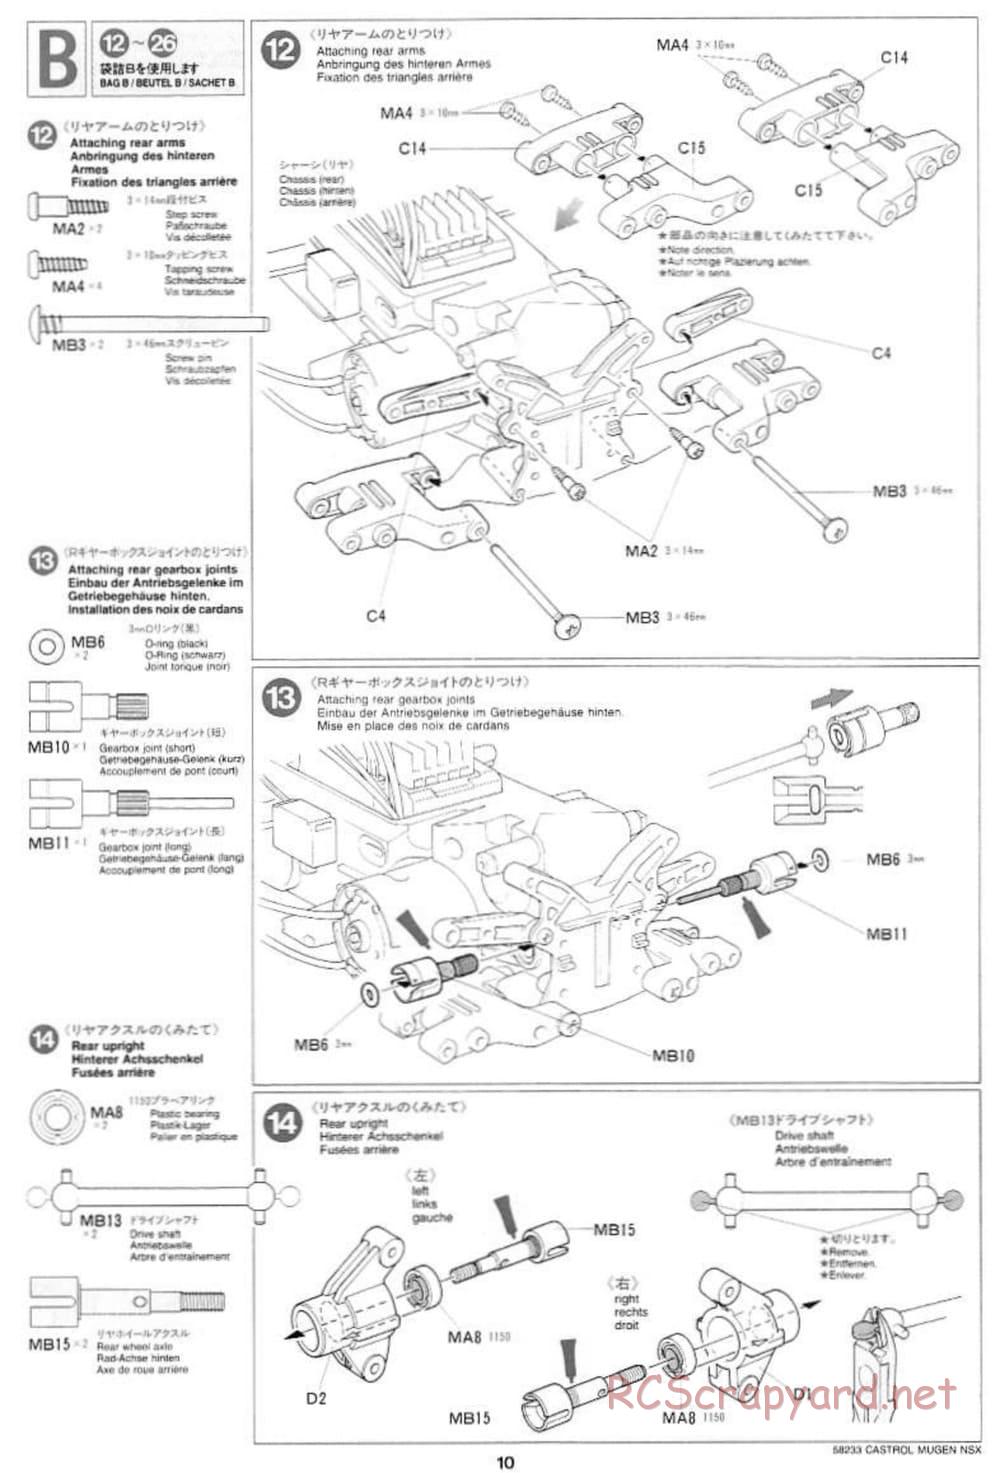 Tamiya - Castrol Mugen NSX - TL-01 Chassis - Manual - Page 10